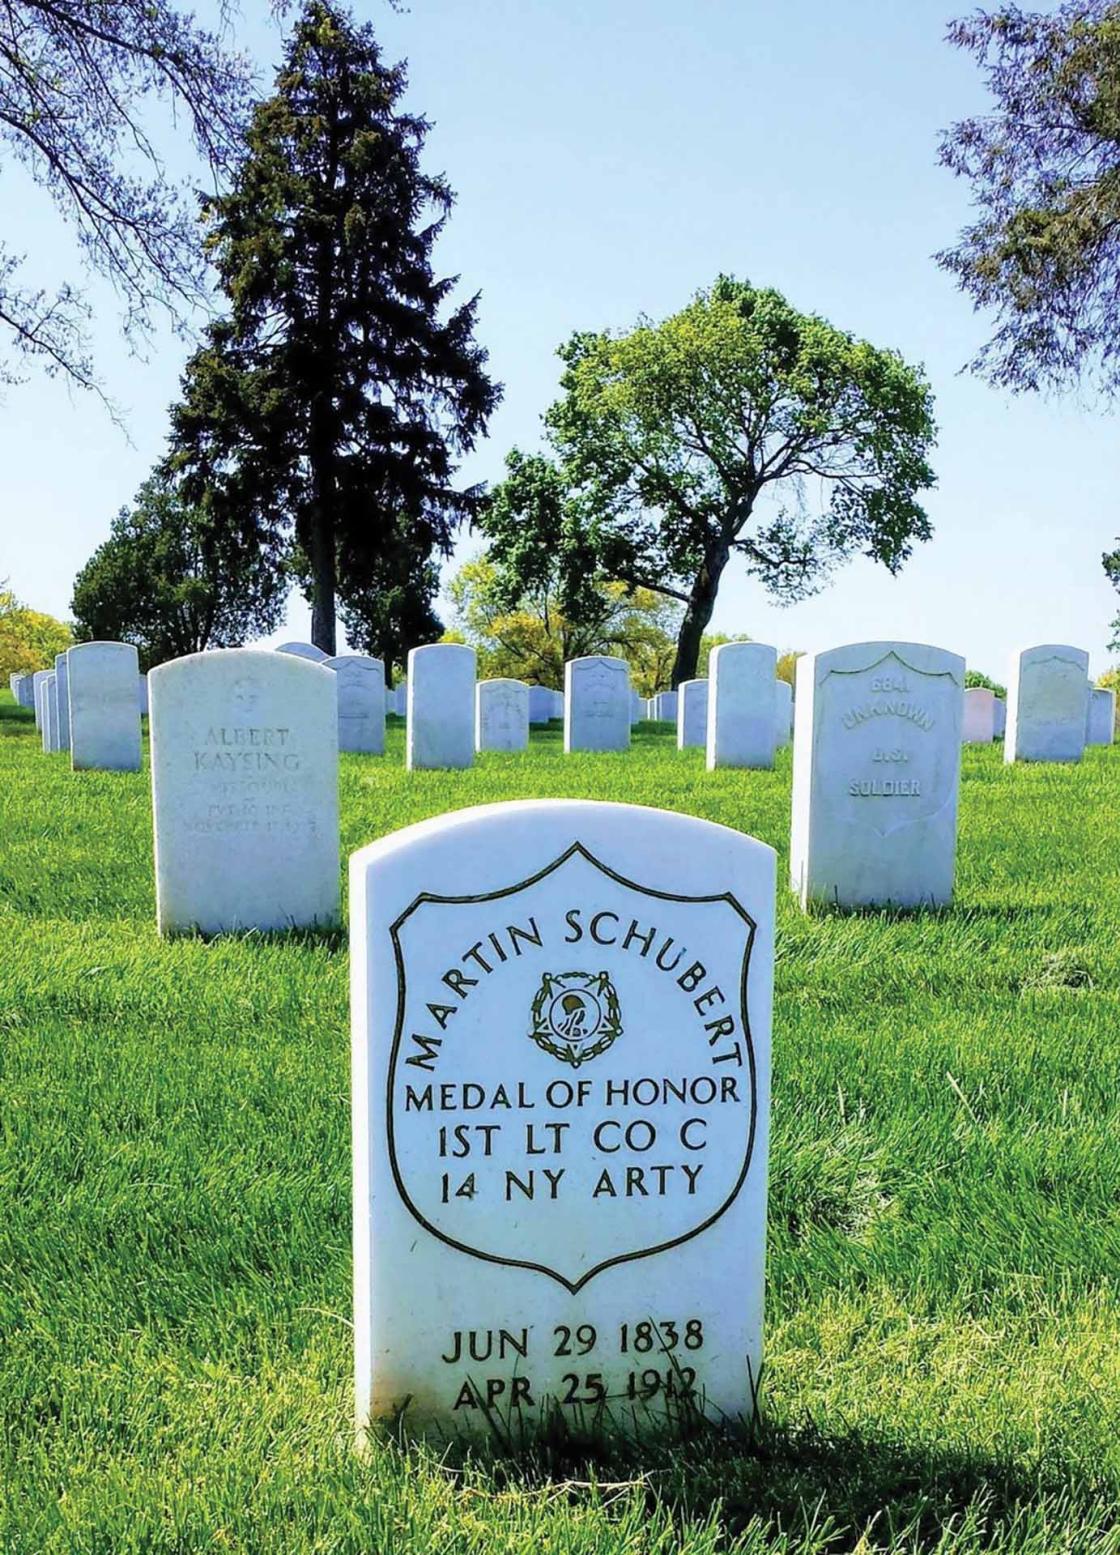 Medal of Honor recipient Martin Schubert's grave, Jefferson Barracks National Cemetery, St. Louis, Mo.